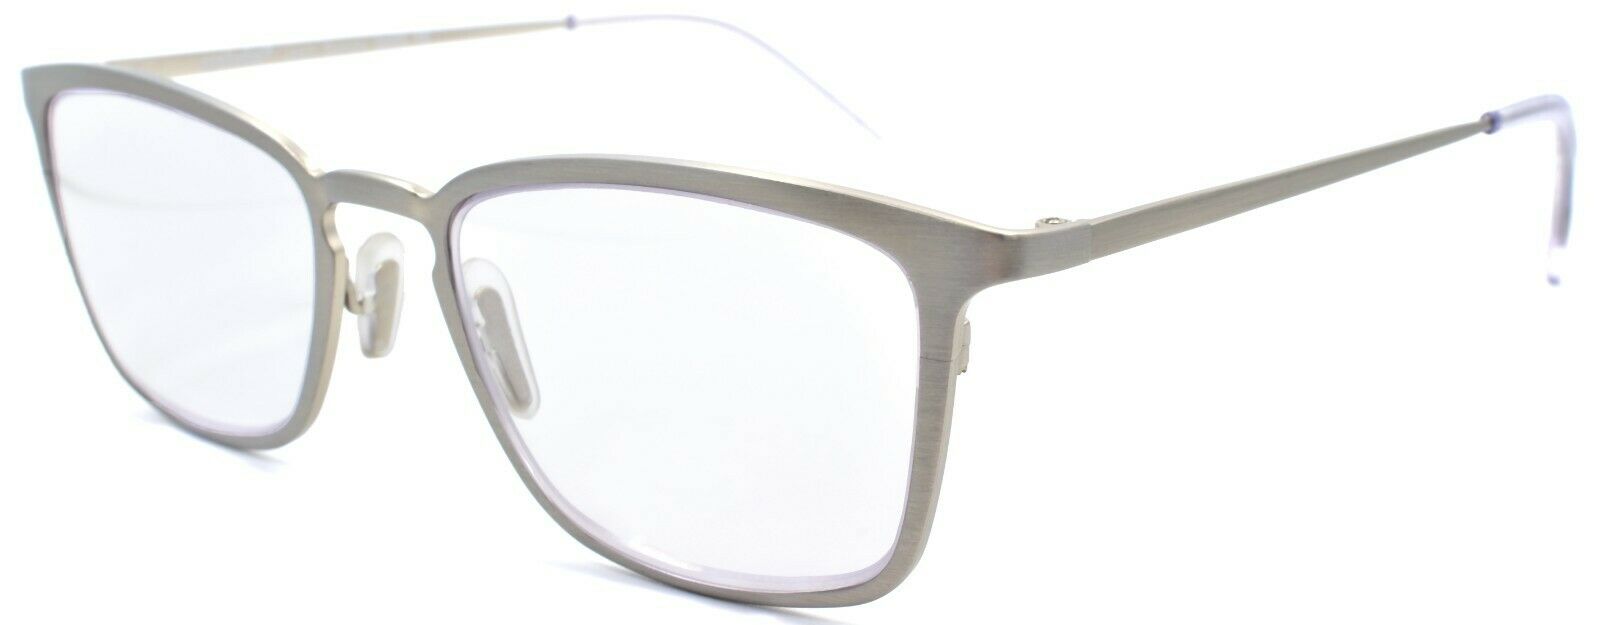 1-Eyebobs Jack Dandy 2605 98 Unisex Reading Glasses Silver +3.50-842754133449-IKSpecs